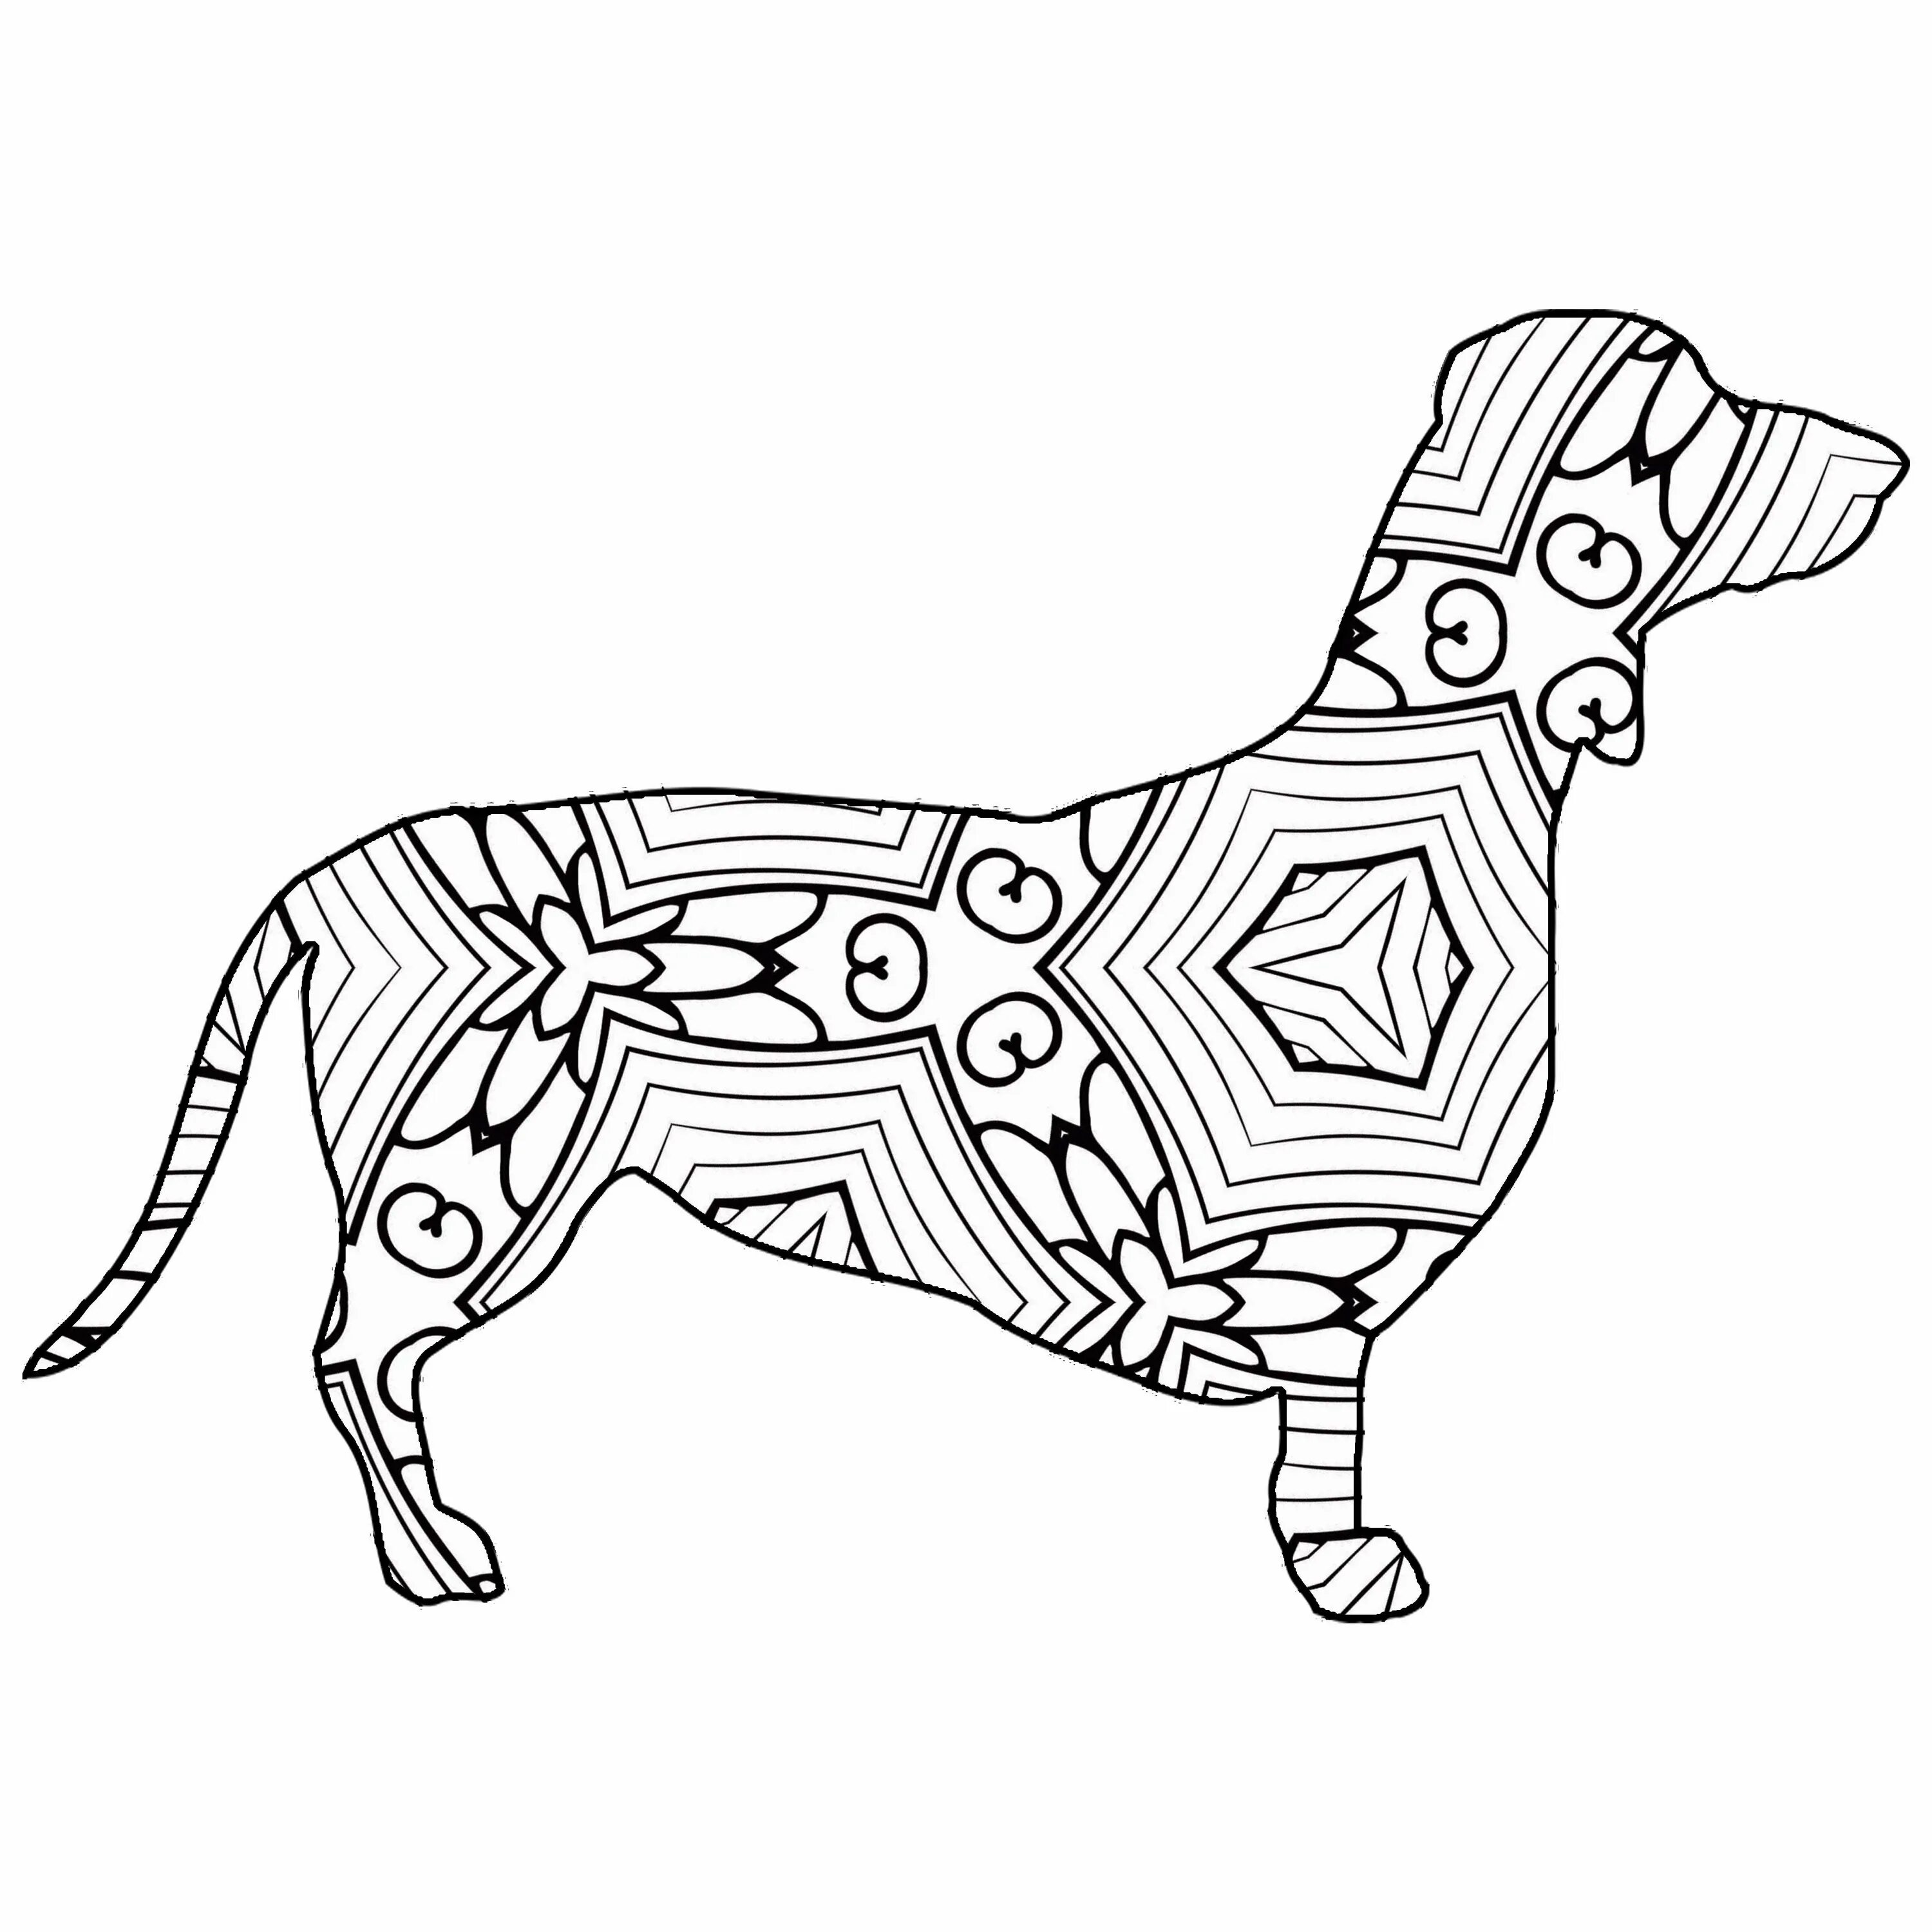 Color-blast spiral dog coloring page